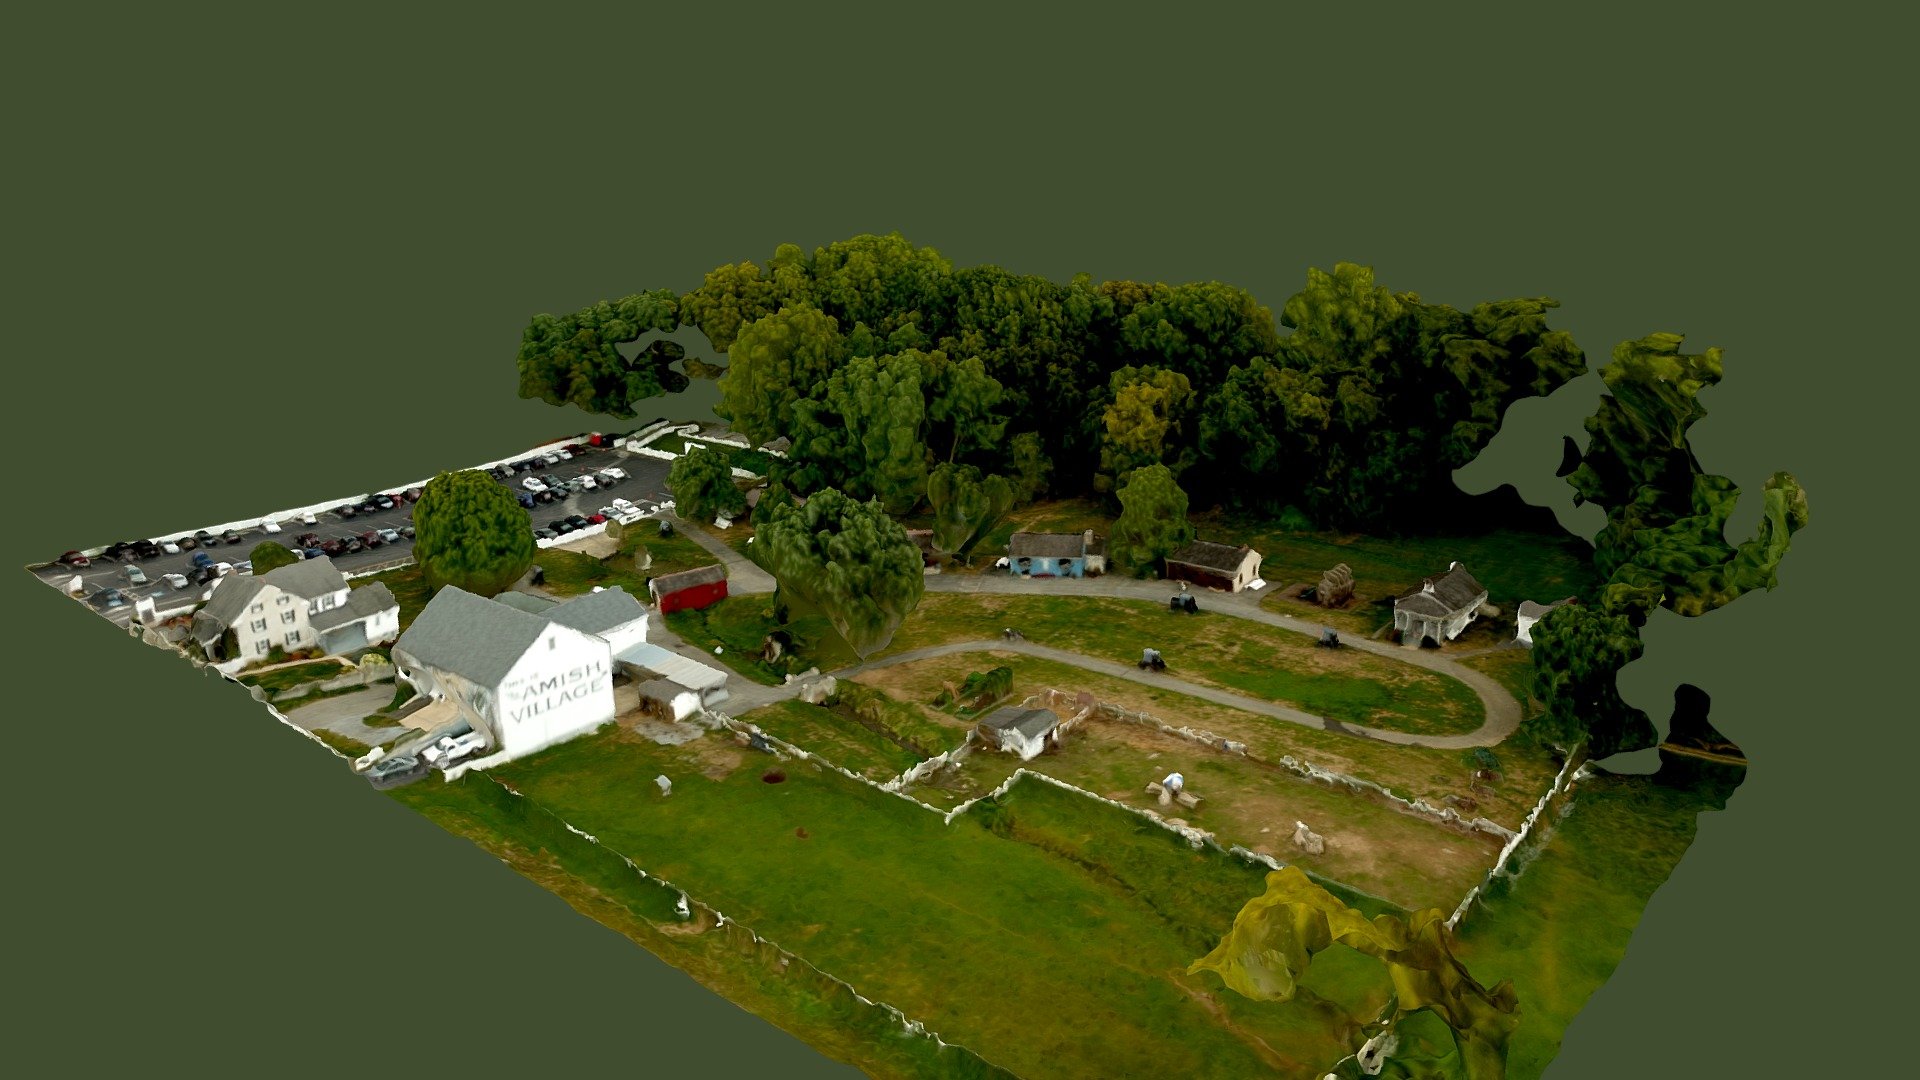 Amish Village located in Strasburg, PA